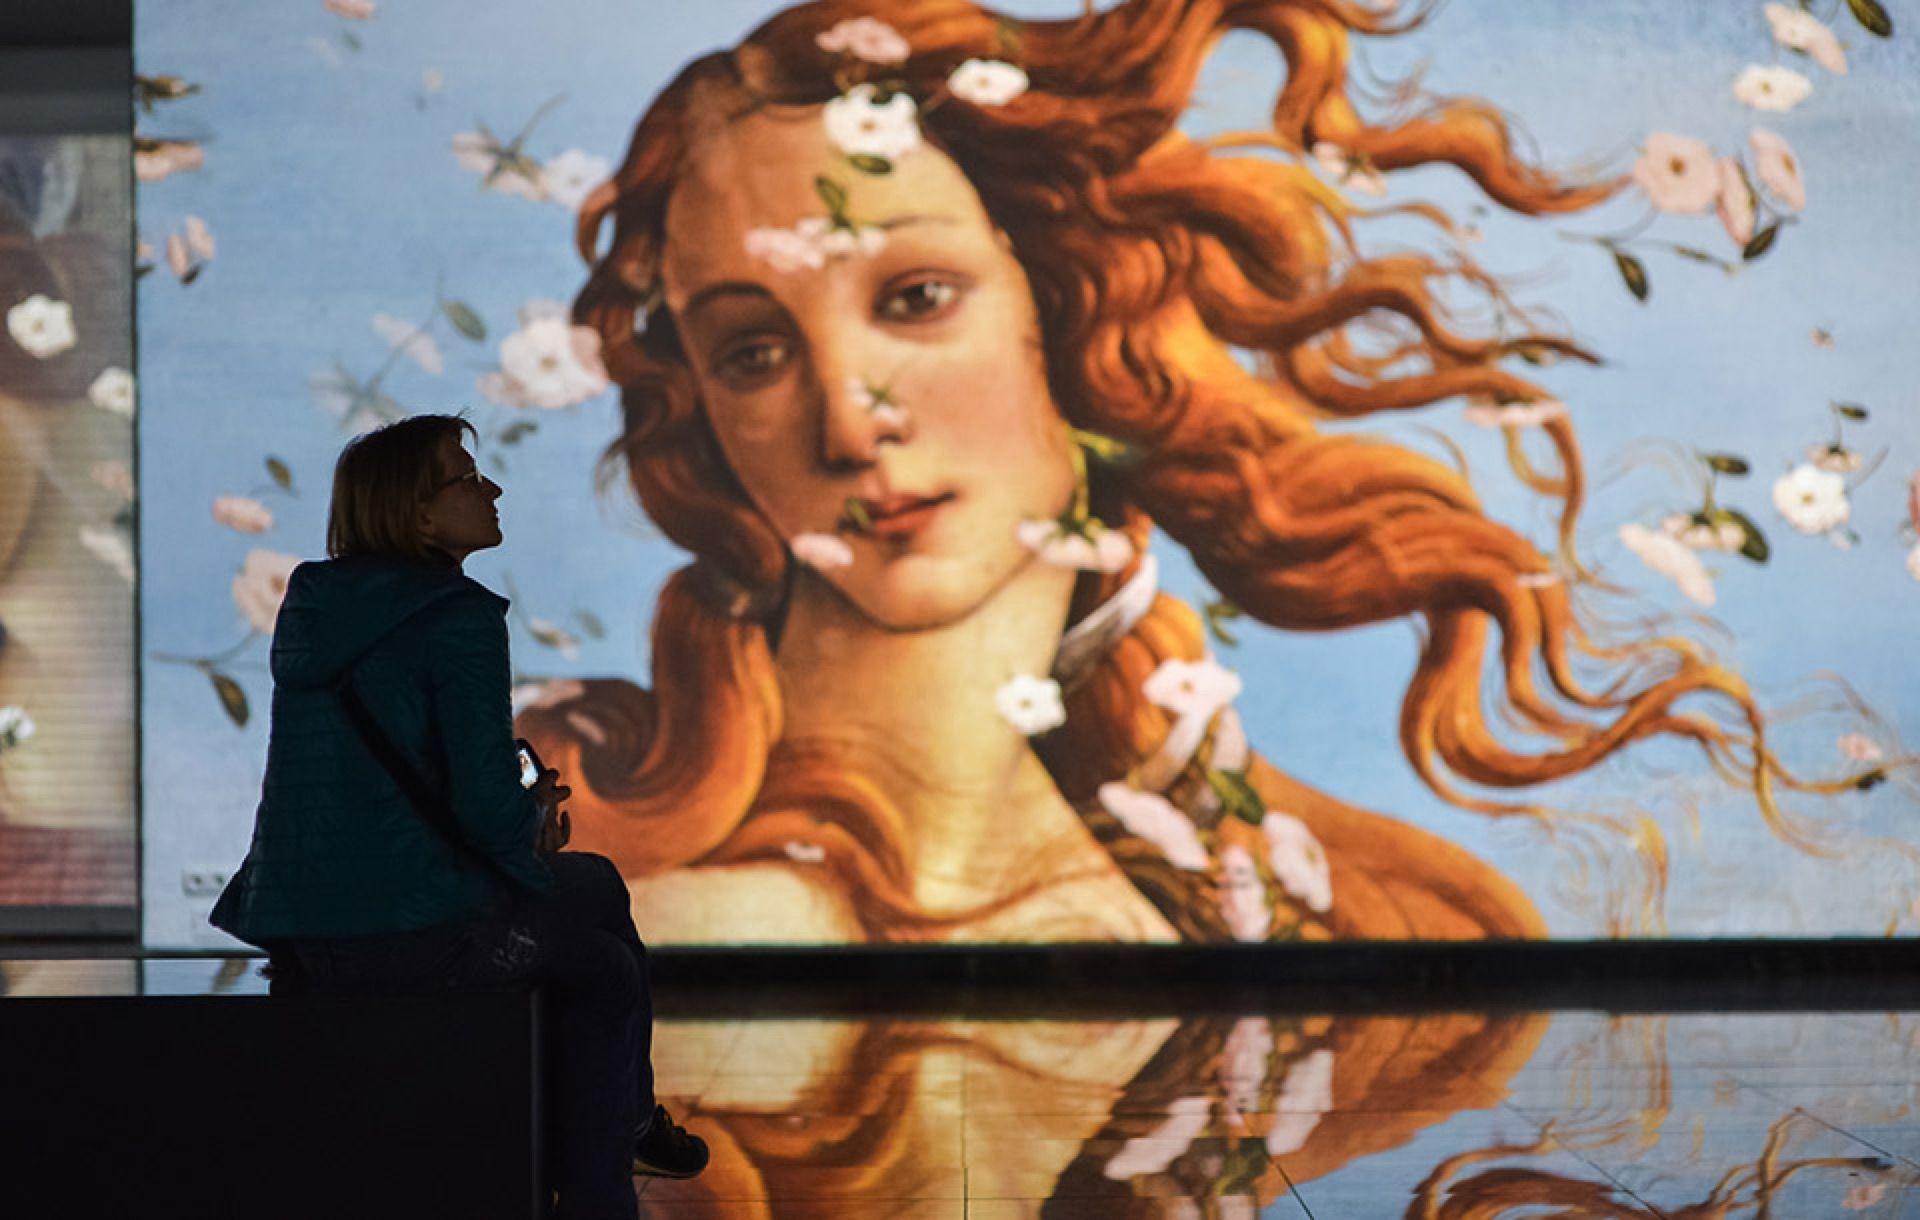 A visitor enjoying the Renaissance multimedia exhibition